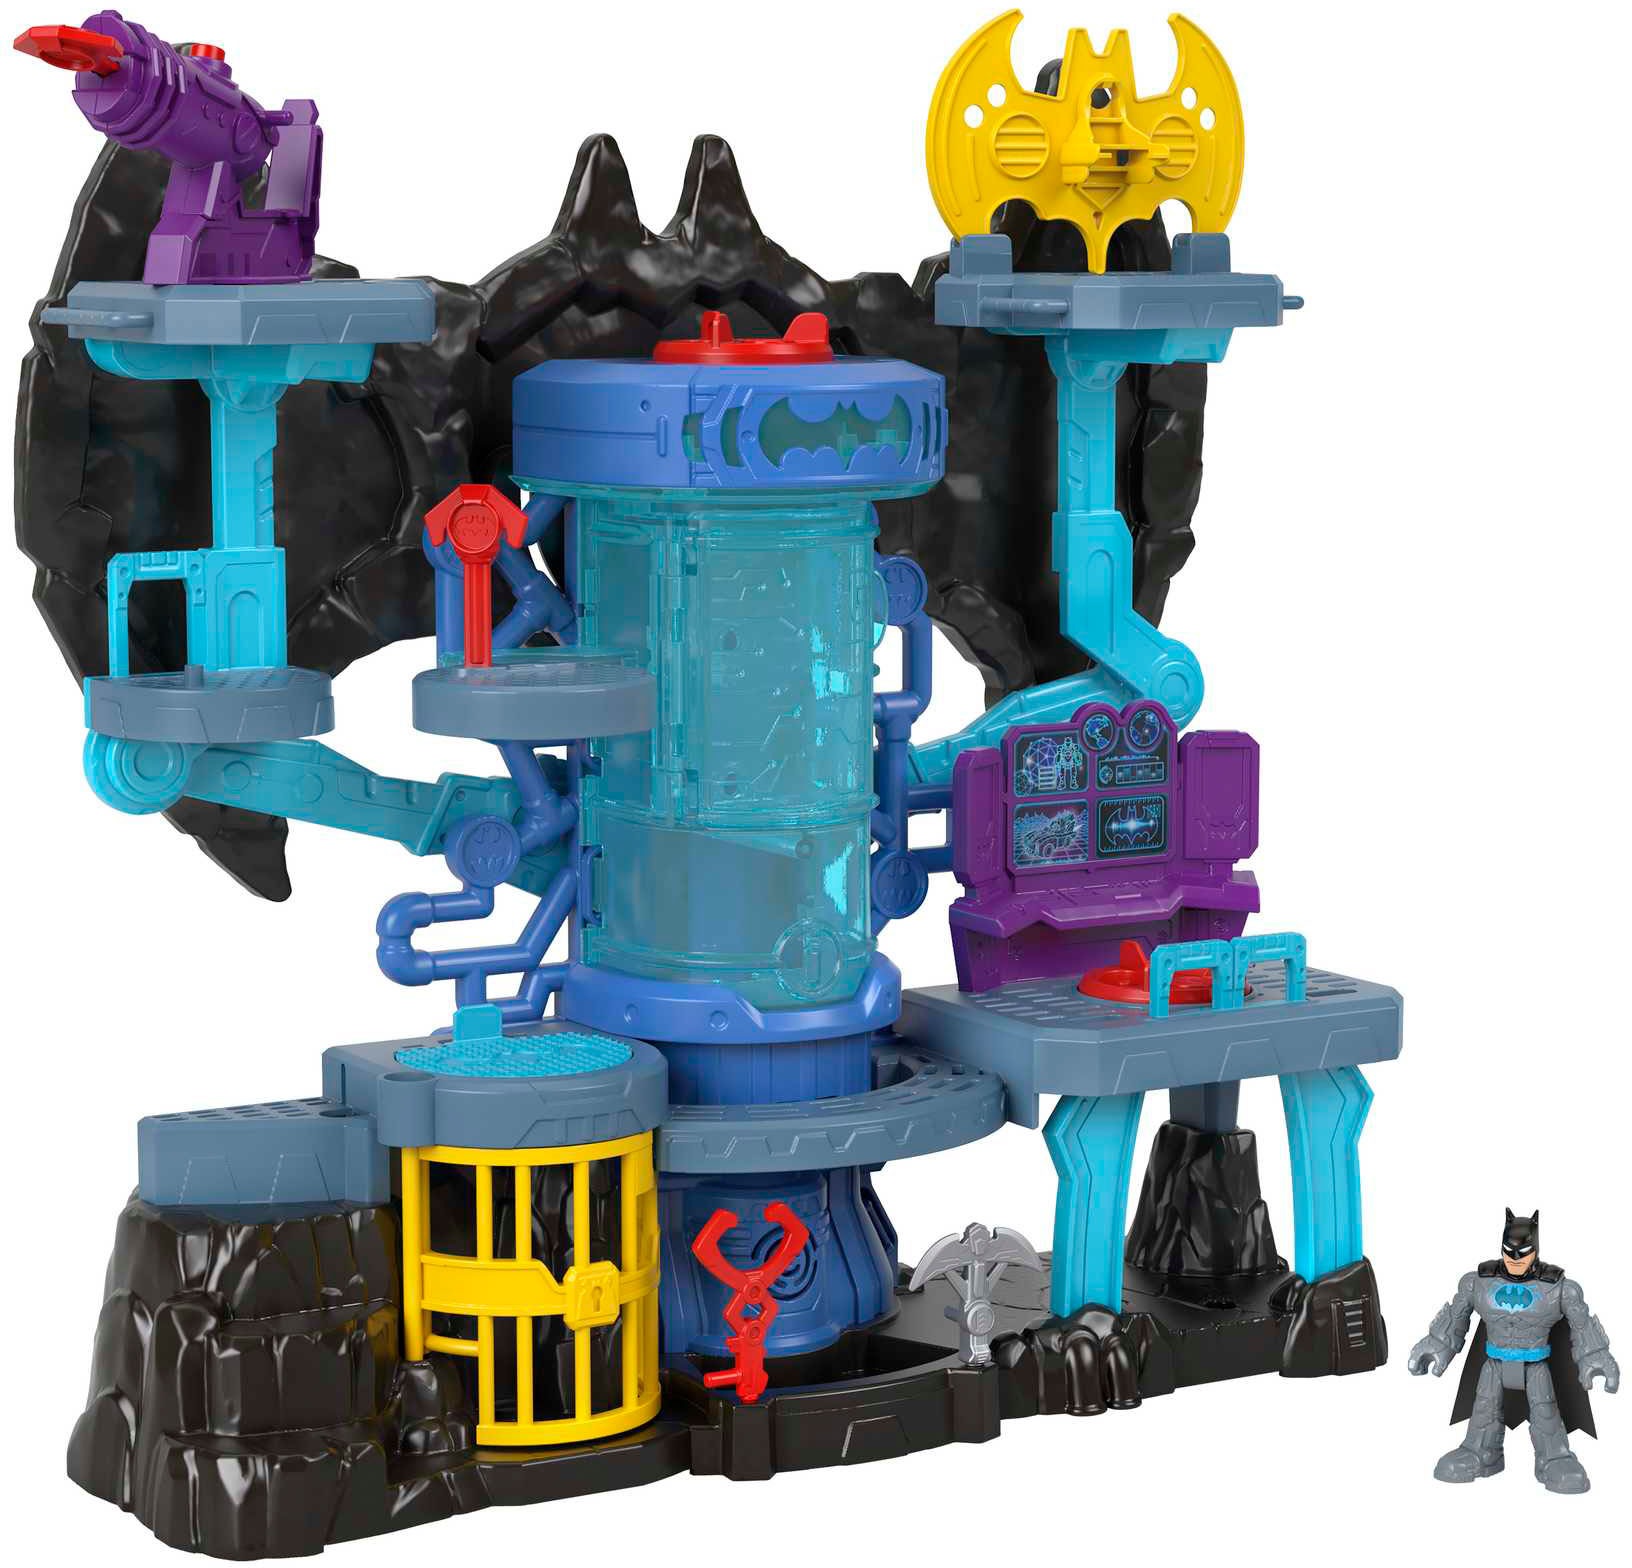 Mattel® Spielwelt »Imaginext DC Super Friends Bat-Tech Batcave«, inklusive Batman-Figur, Licht und Sound